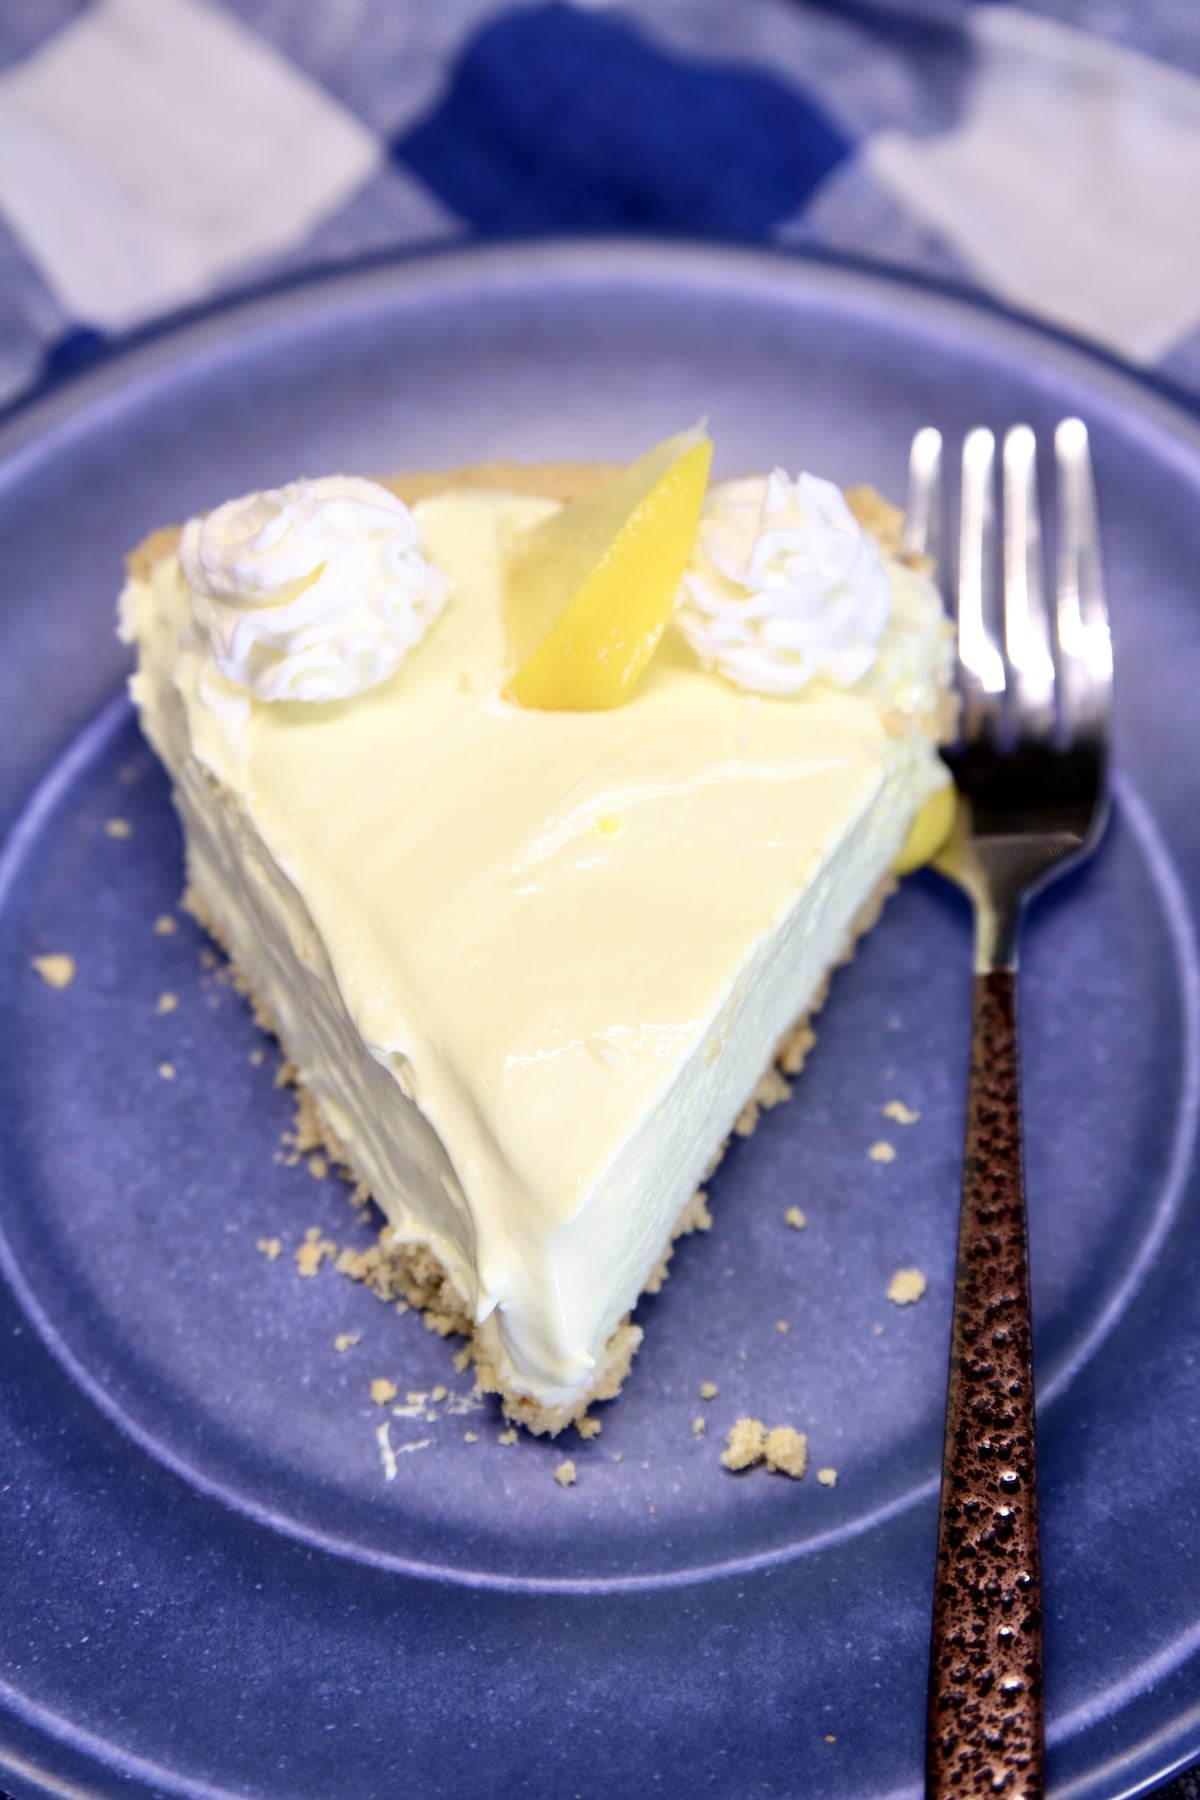 Slice of lemon pie on a blue plate.